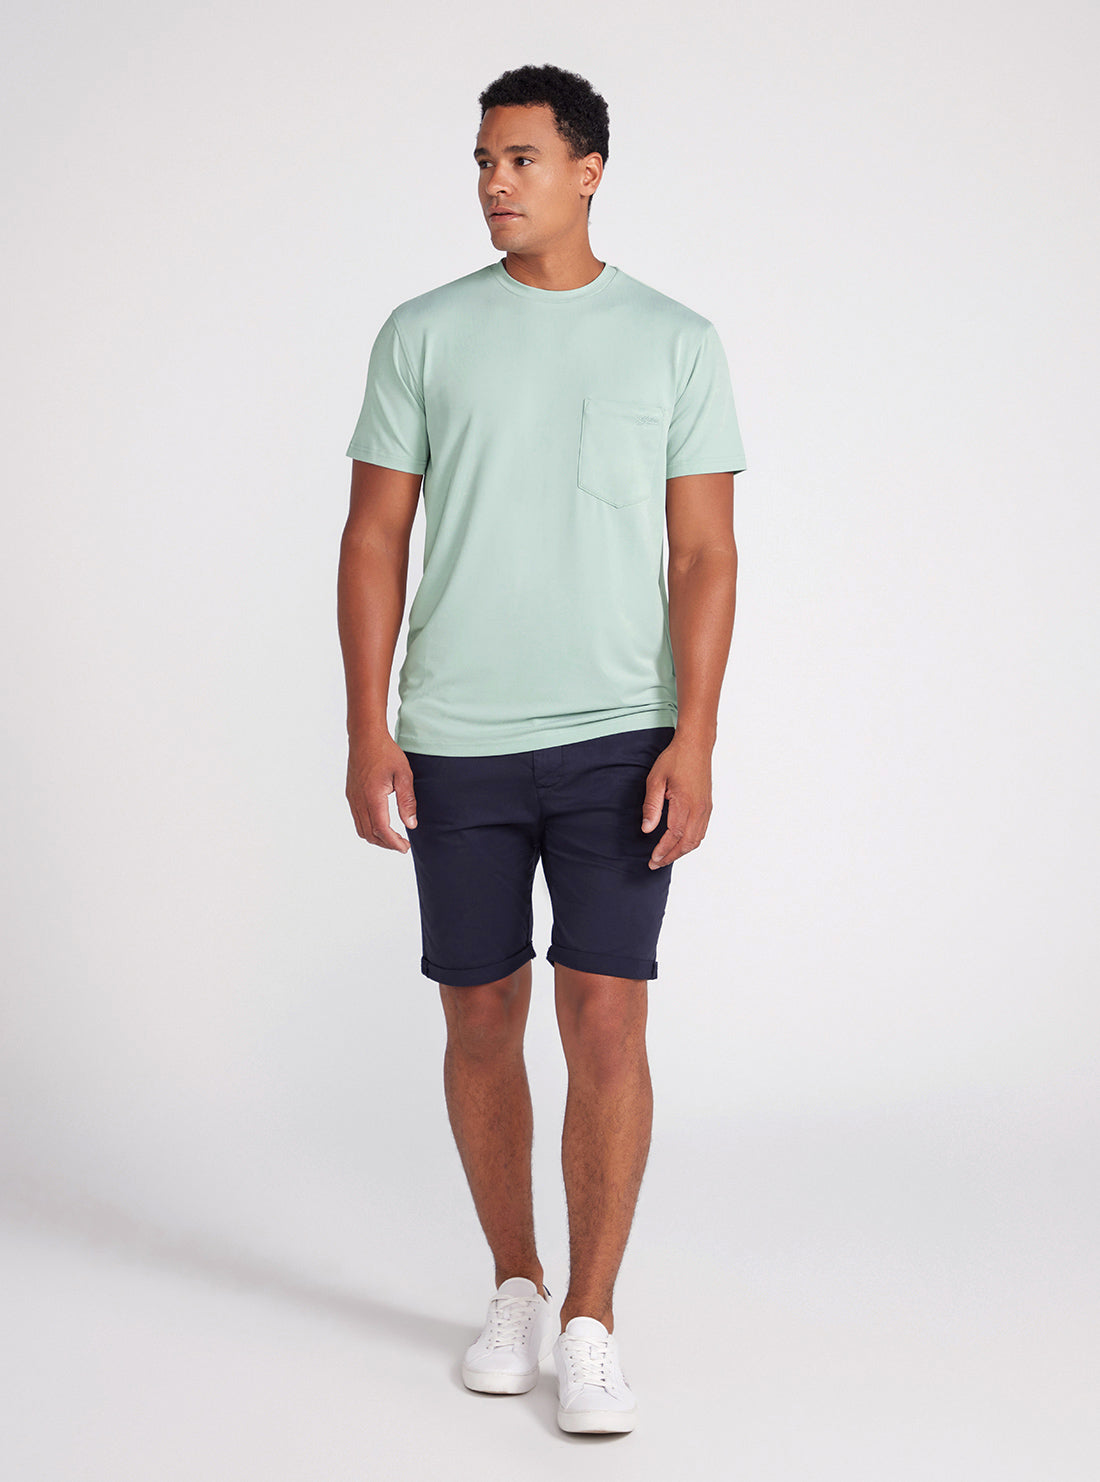 Mint Green Smooth T-Shirt | GUESS Men's Apparel | full view